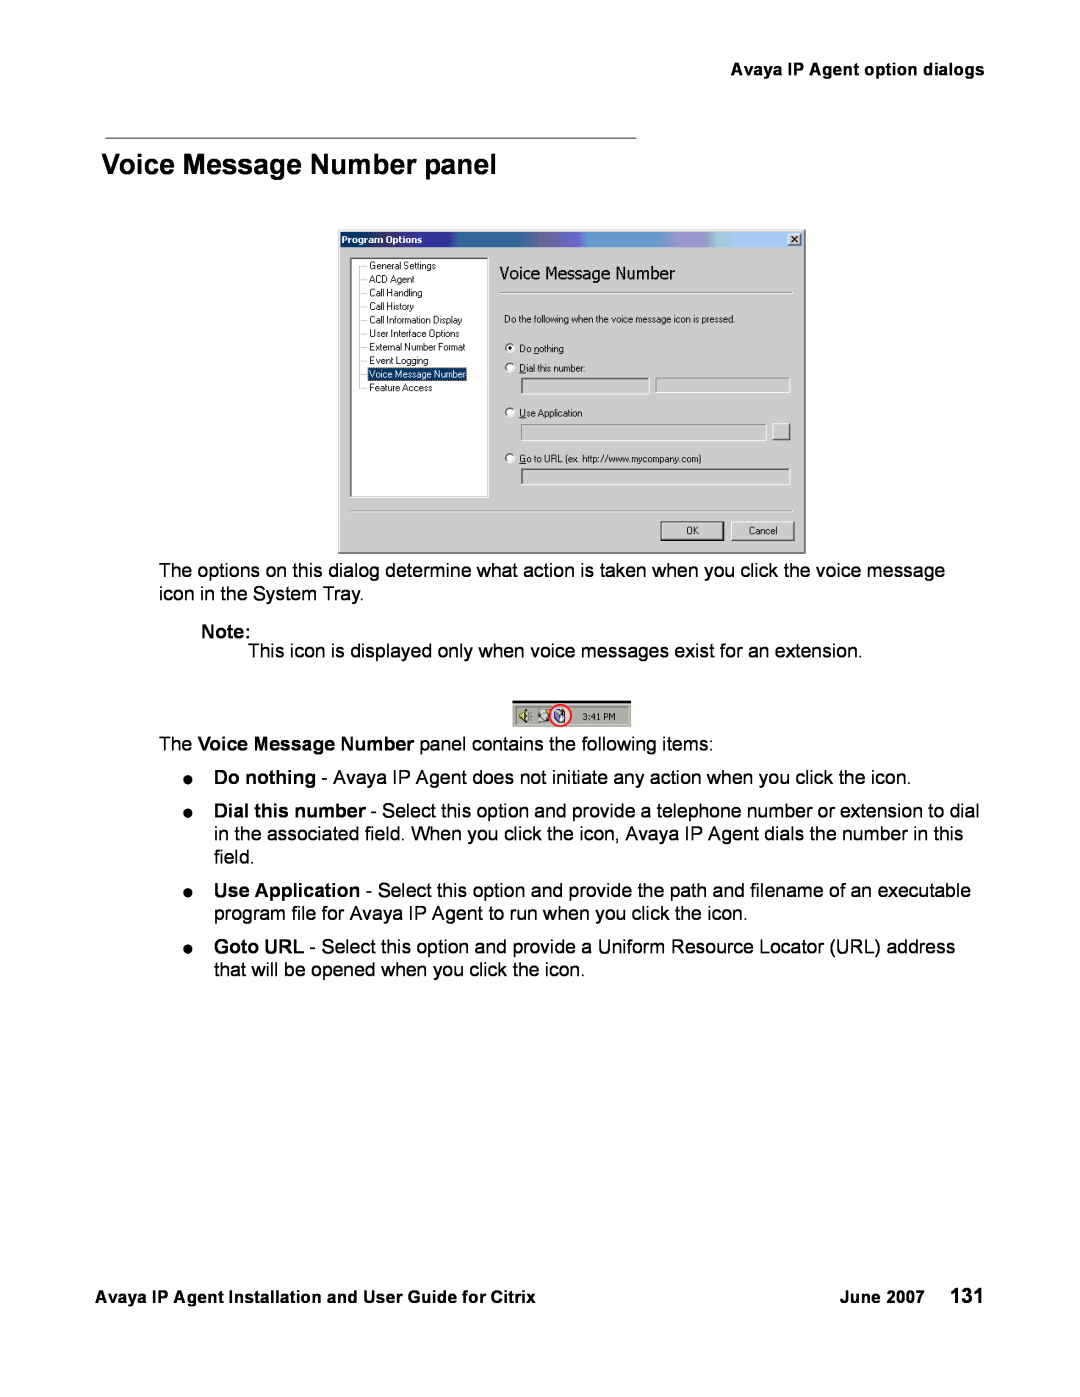 Avaya 7 manual Voice Message Number panel 